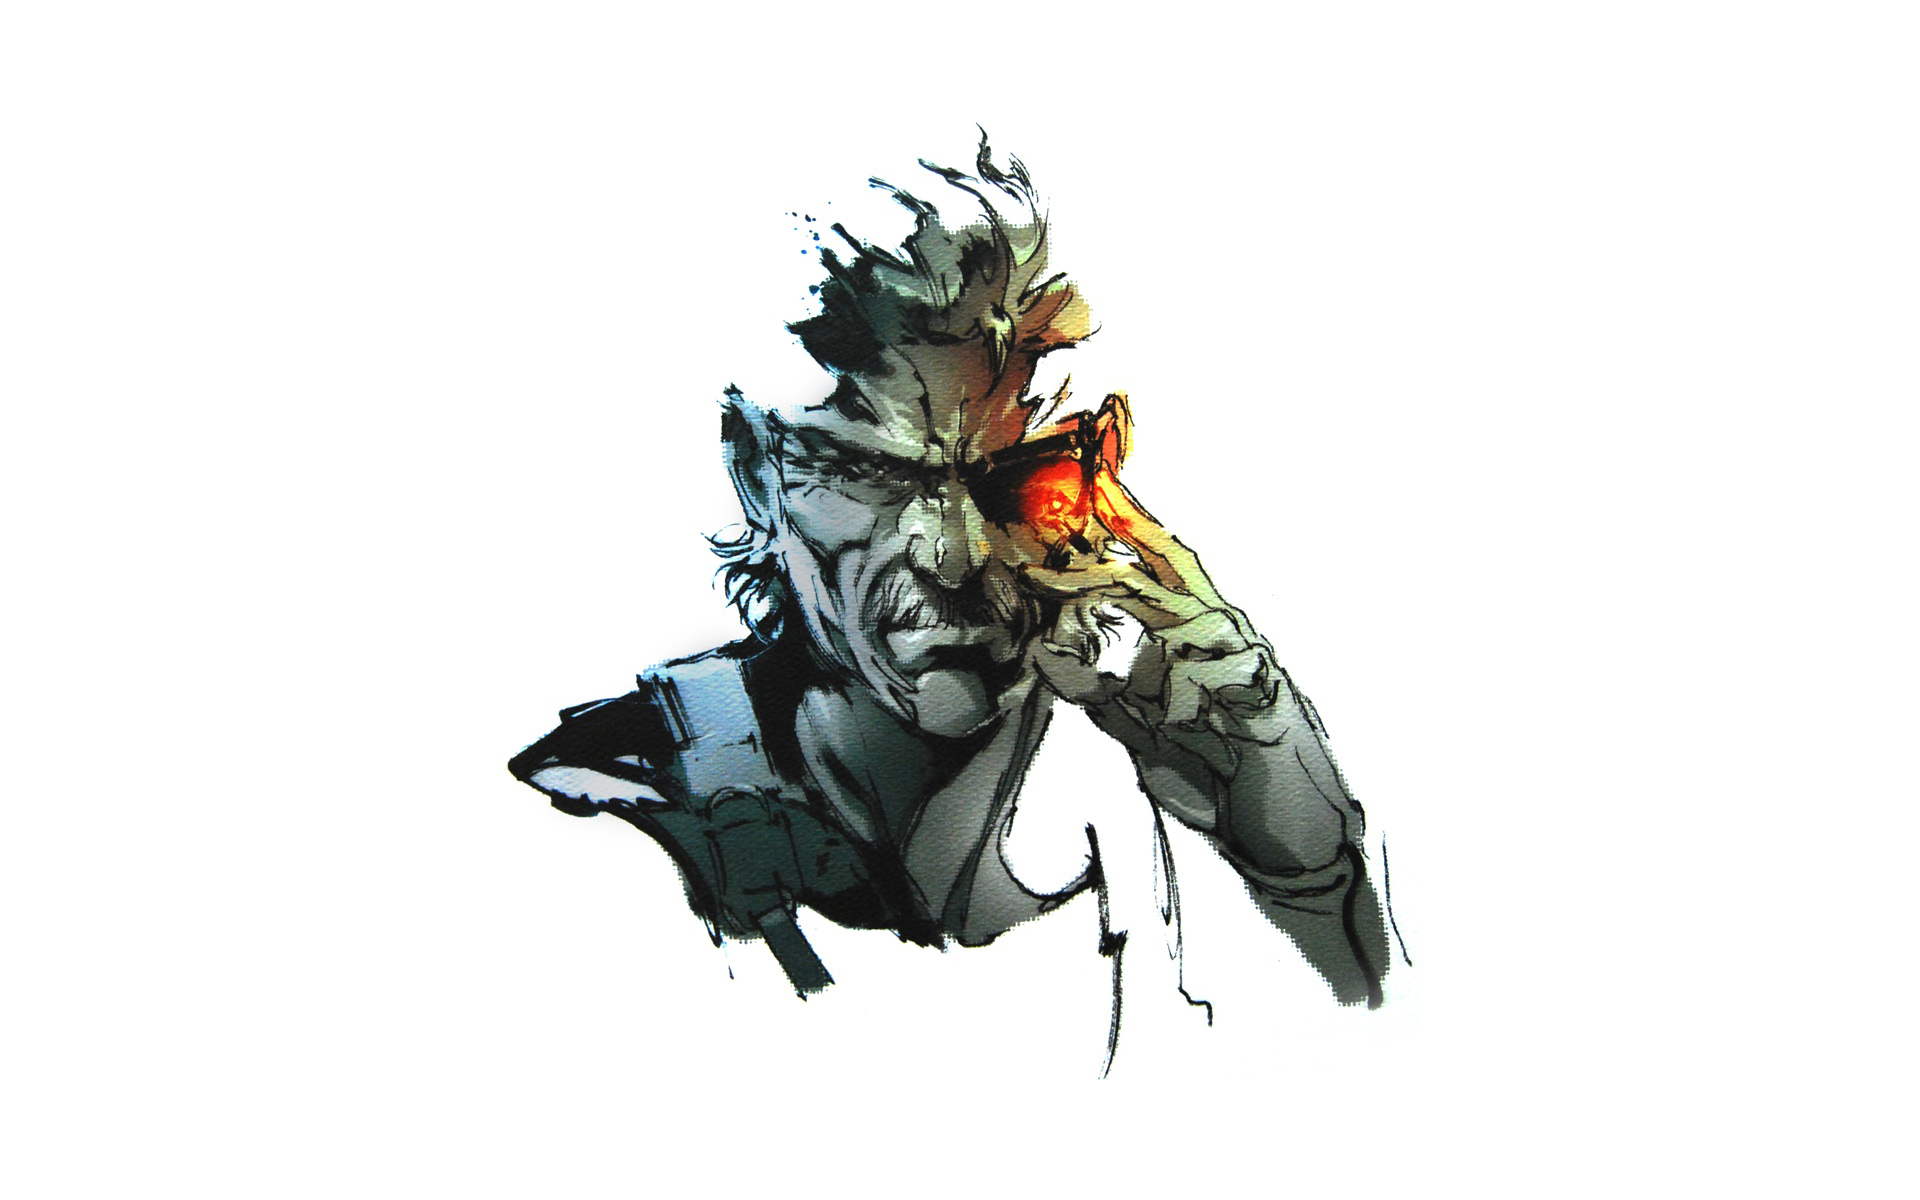 Metal Gear Solid hd wallpaper 1920x1200 112819